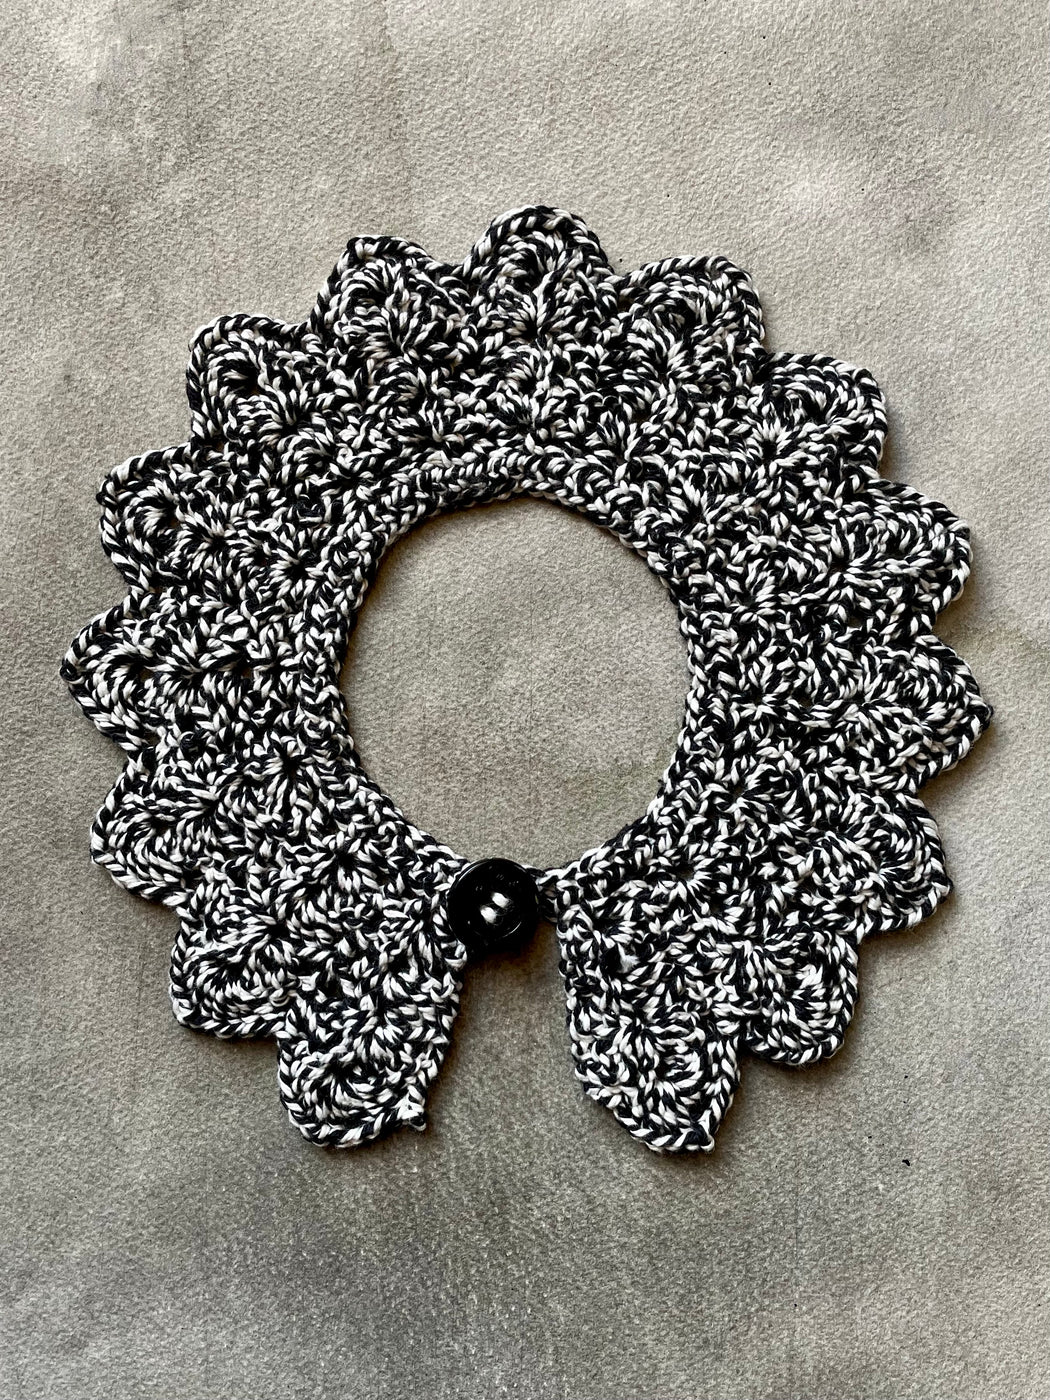 "Black Tweed" Hand-Crocheted Collar by Albo